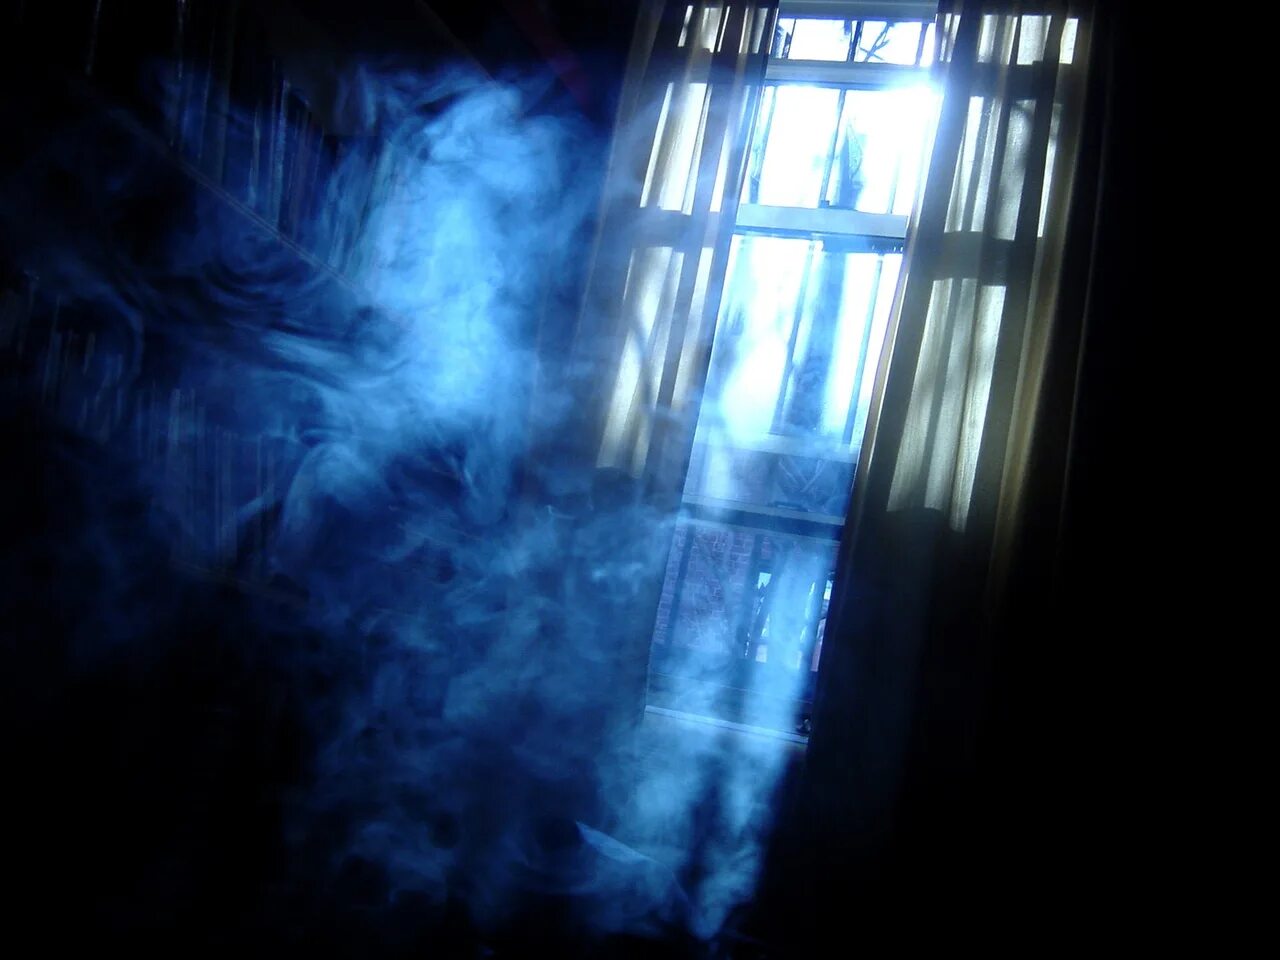 Пошло по комнате дымок. Комната в дыму. Туман в комнате. Задымленная комната. Дым в квартире.